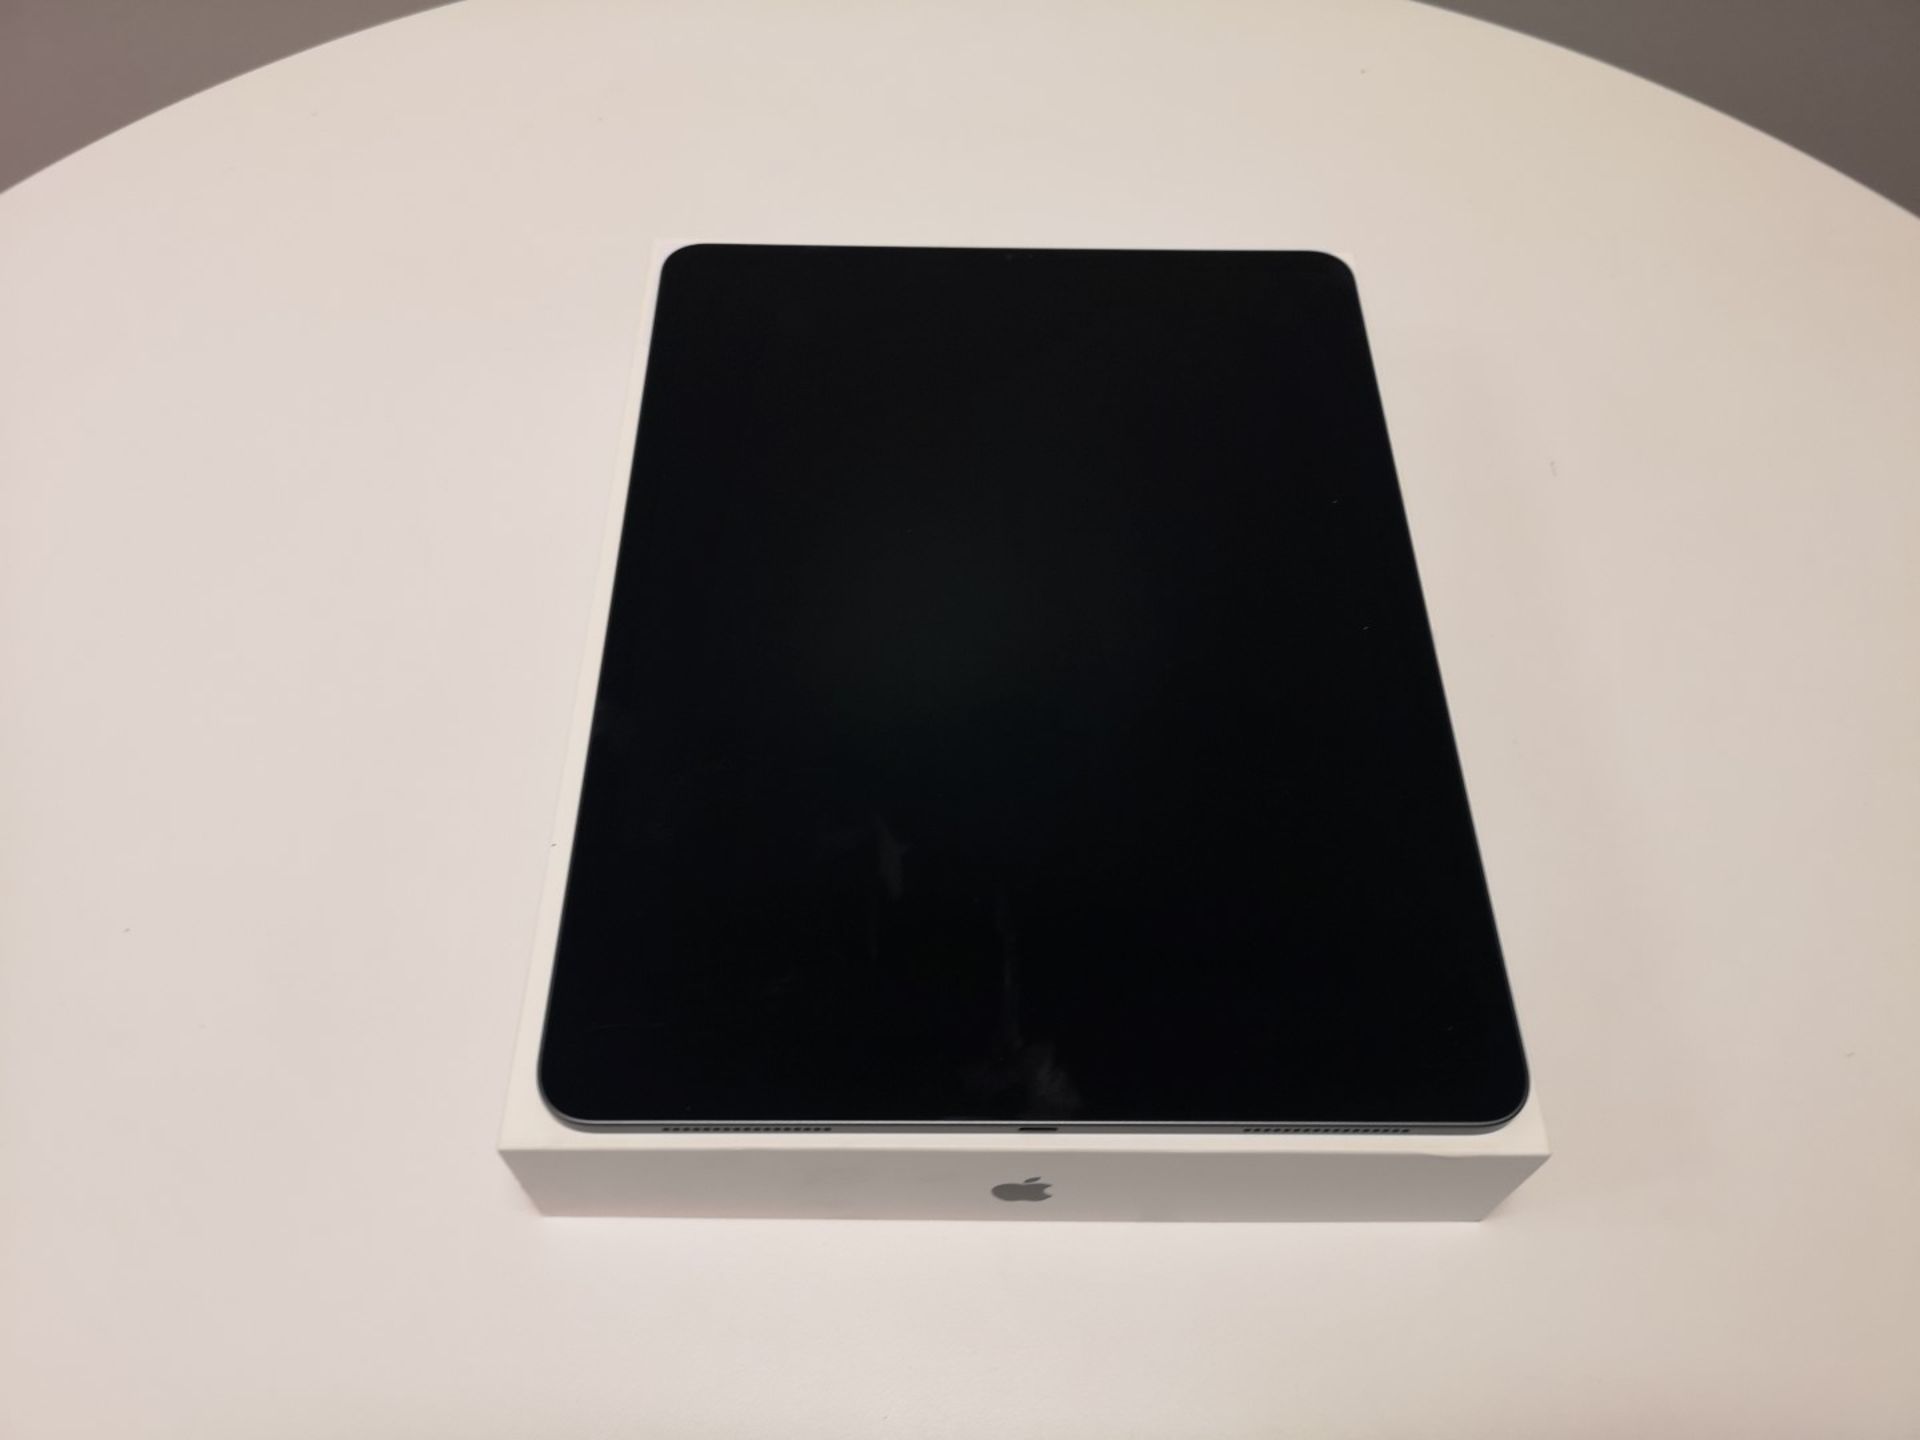 Apple iPad Pro 12.9" 64GB with Retina Display (Wi-Fi Only, Ex-Demo) - Image 3 of 6